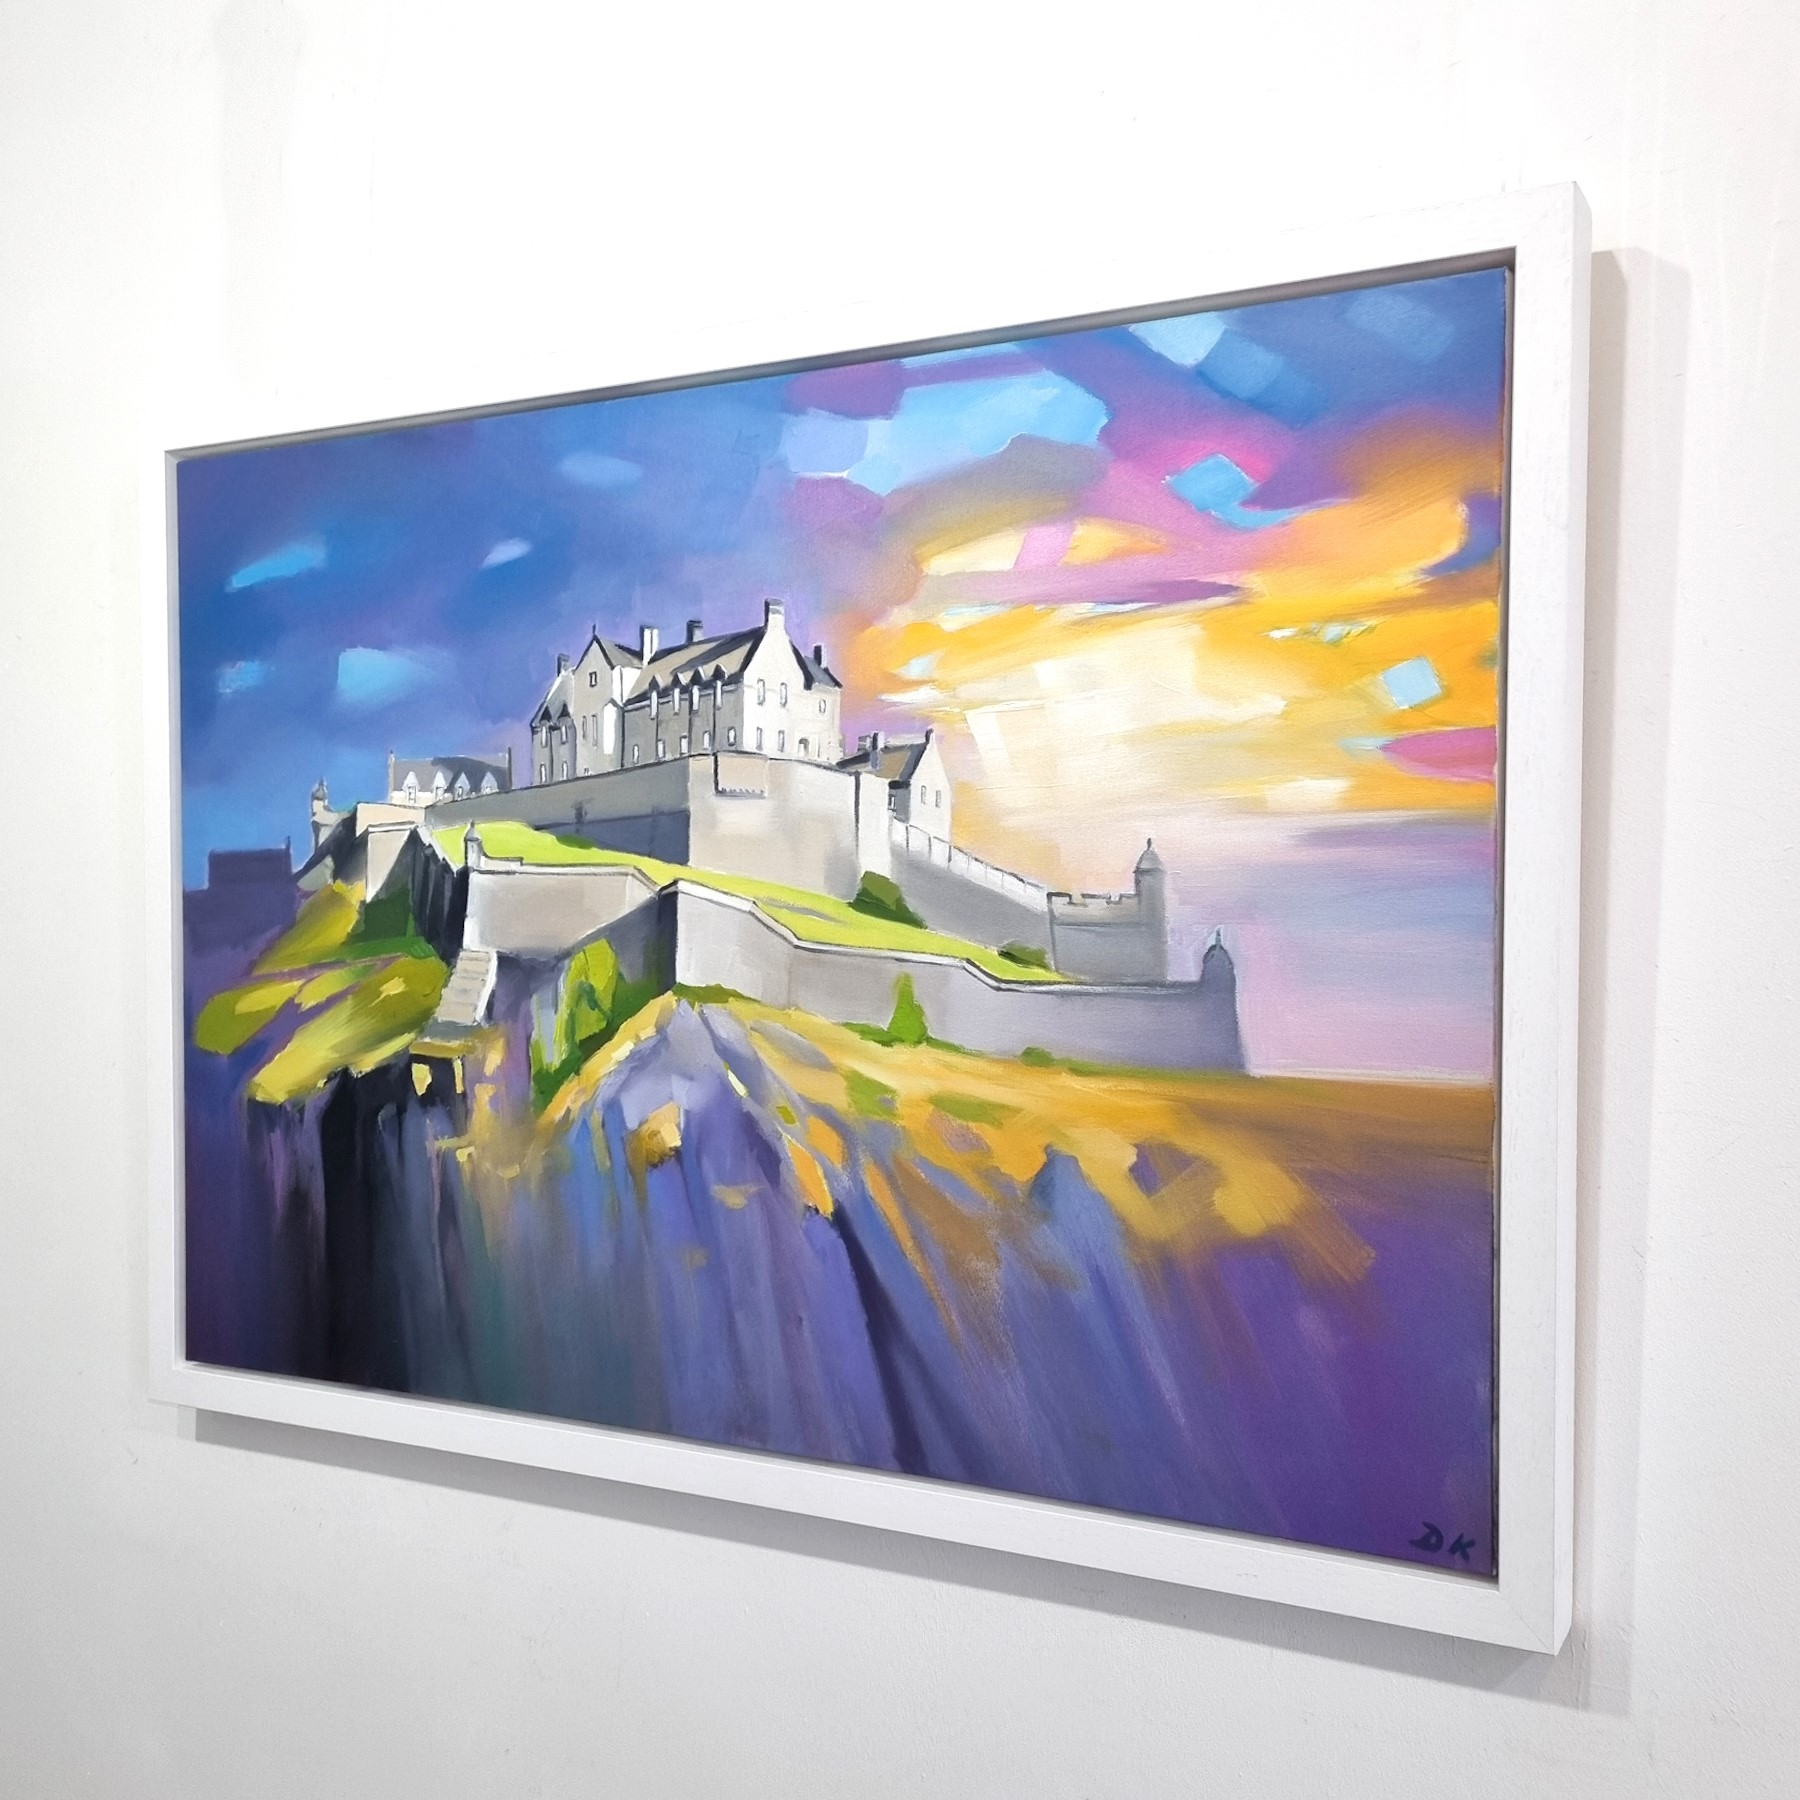 'Edinburgh Castle' by artist DK  MacLeod